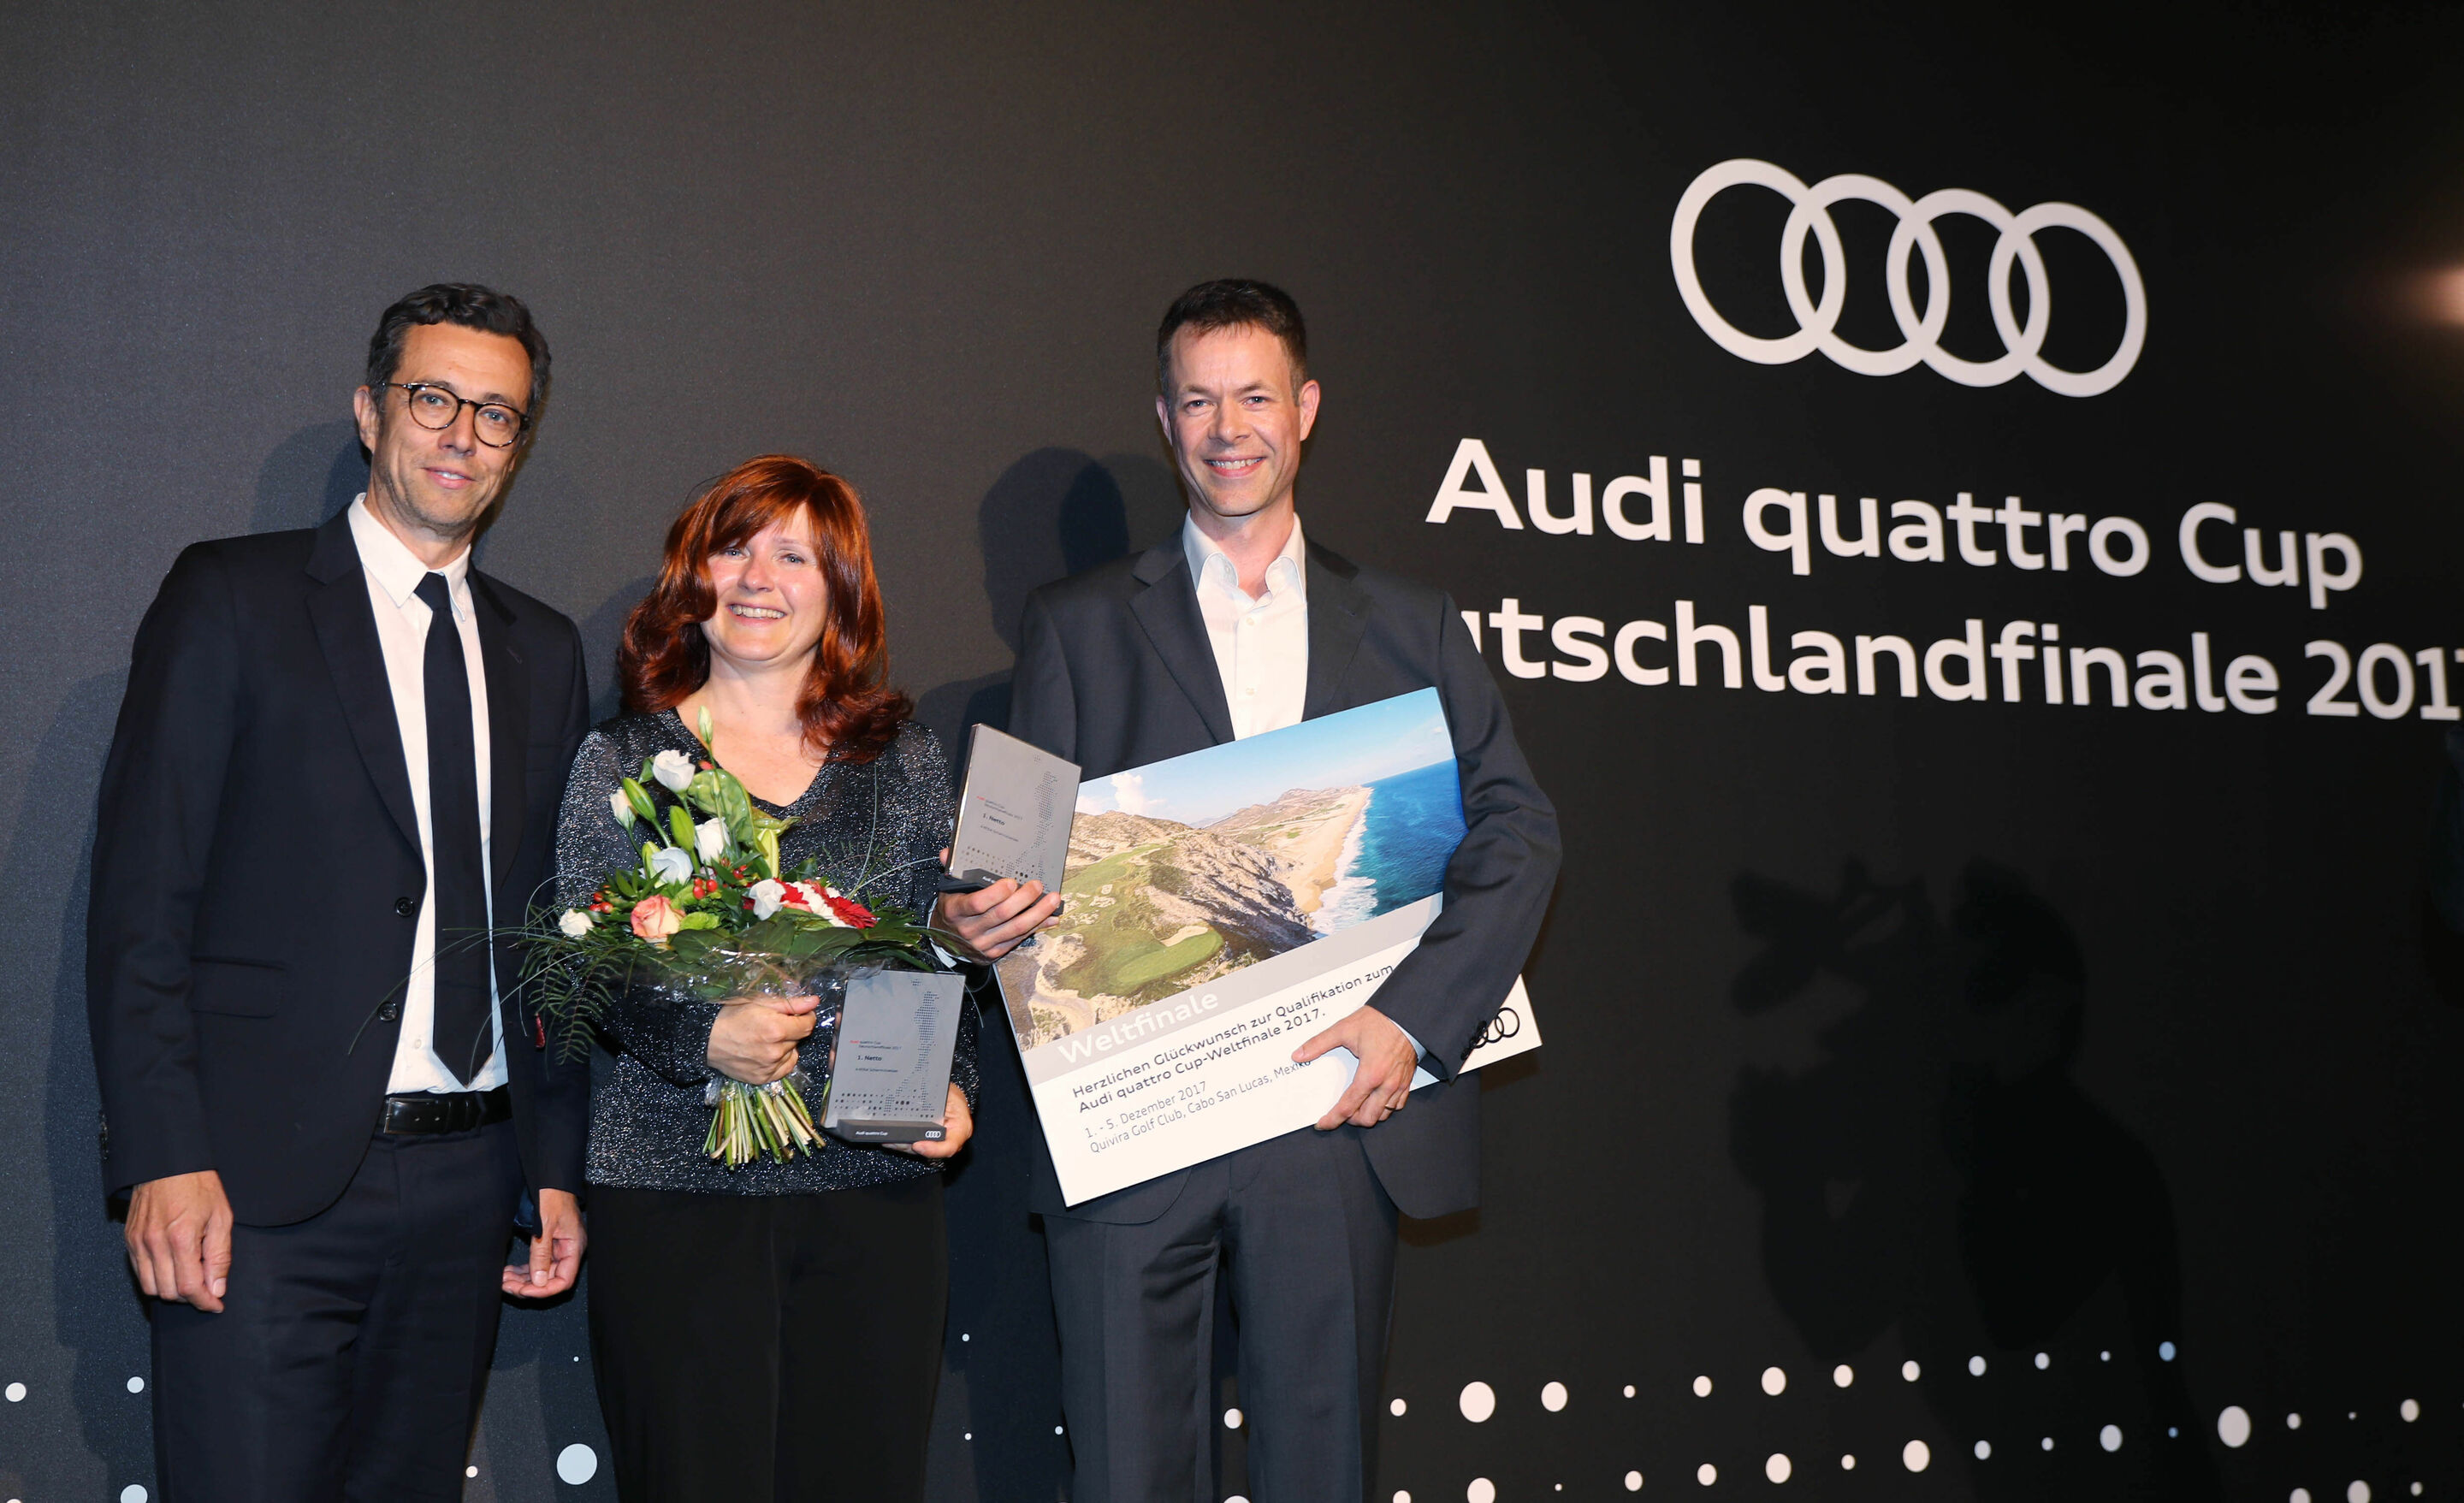 Audi quattro Cup German finale 2017